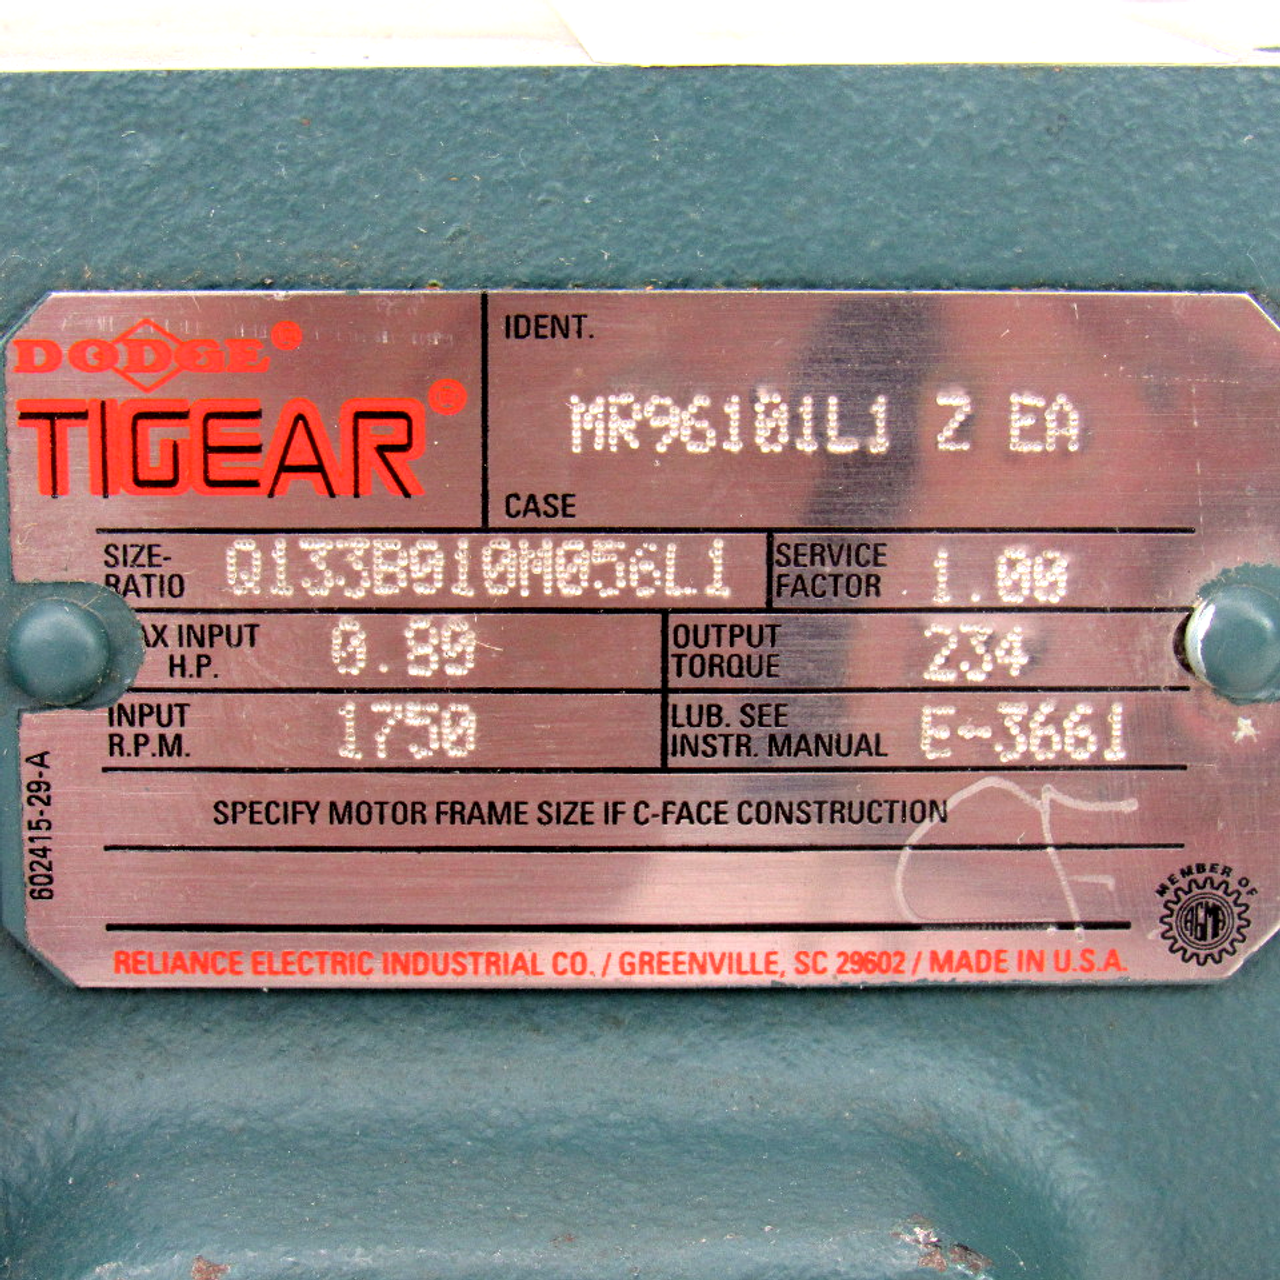 Dodge Tigear MR96101L1 Z EA Speed Reducer, 0.80 HP, Output Torque: 234, 1750 RPM